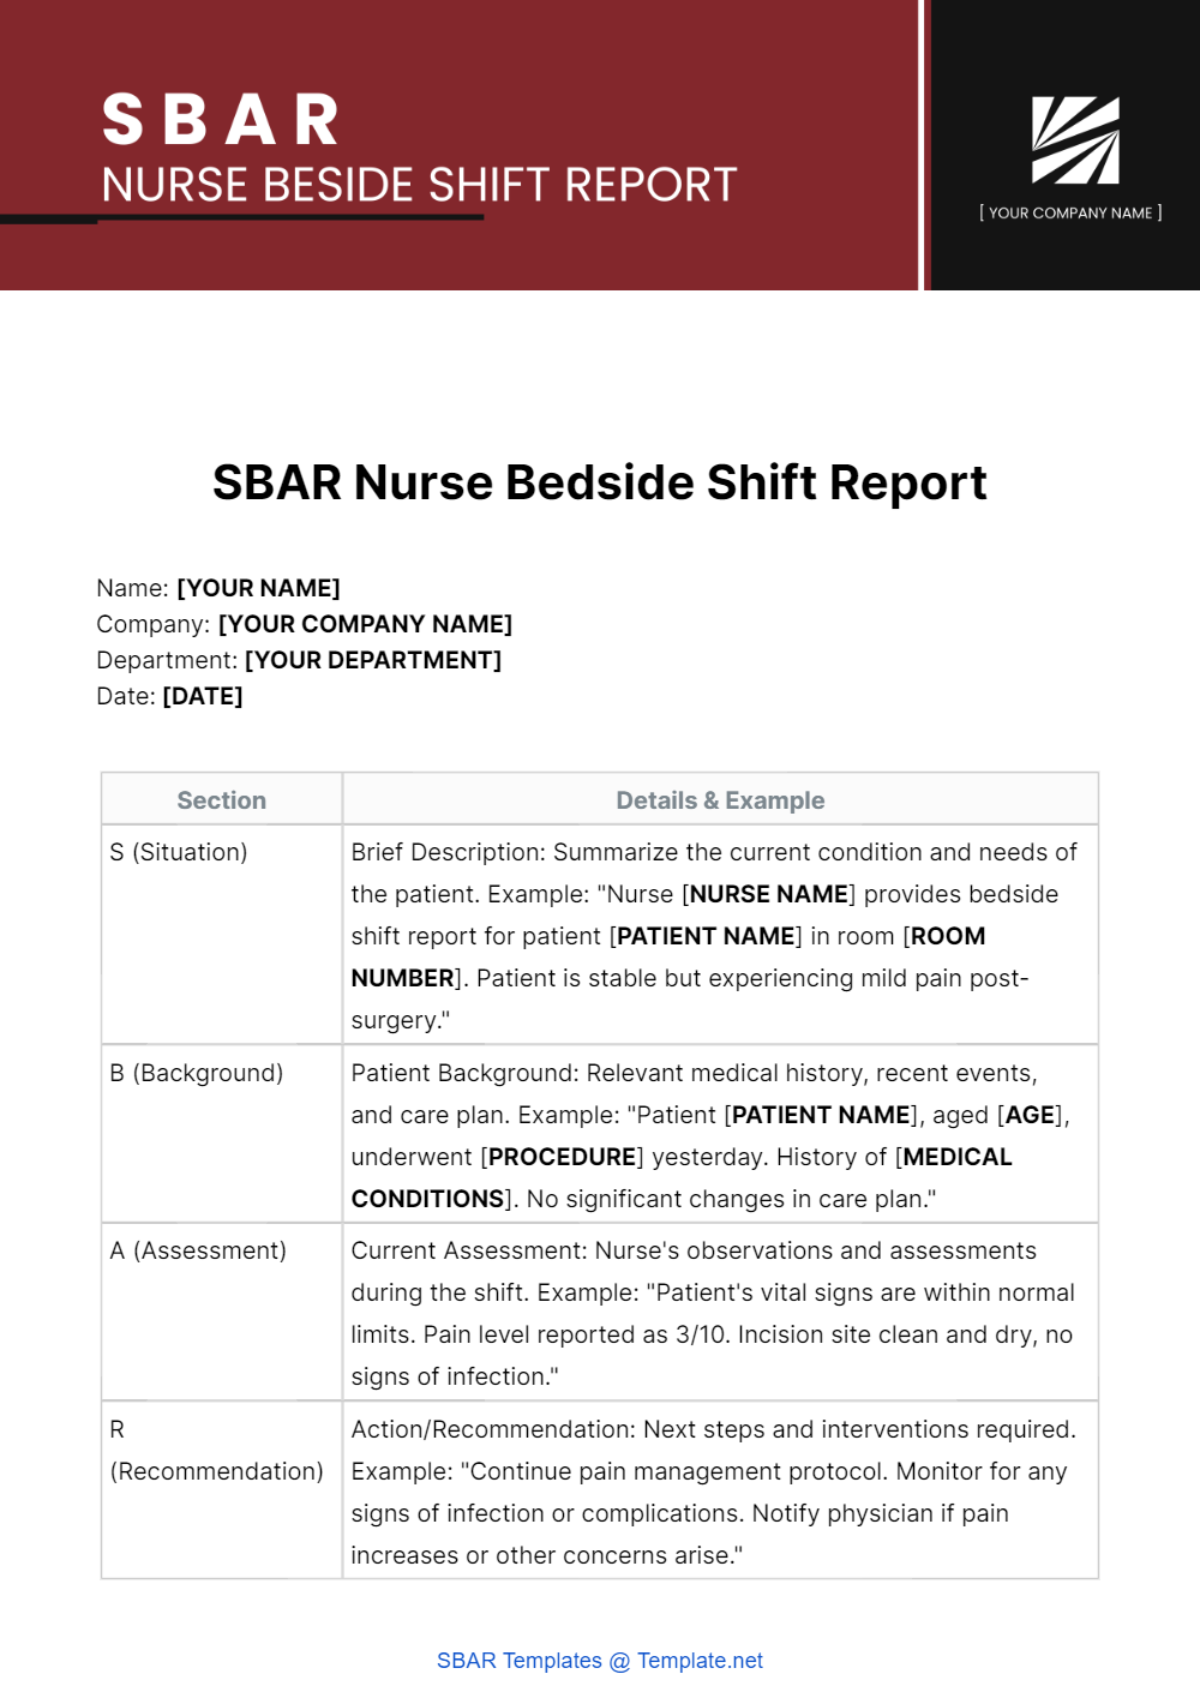 SBAR Nurse Bedside Shift Report Template